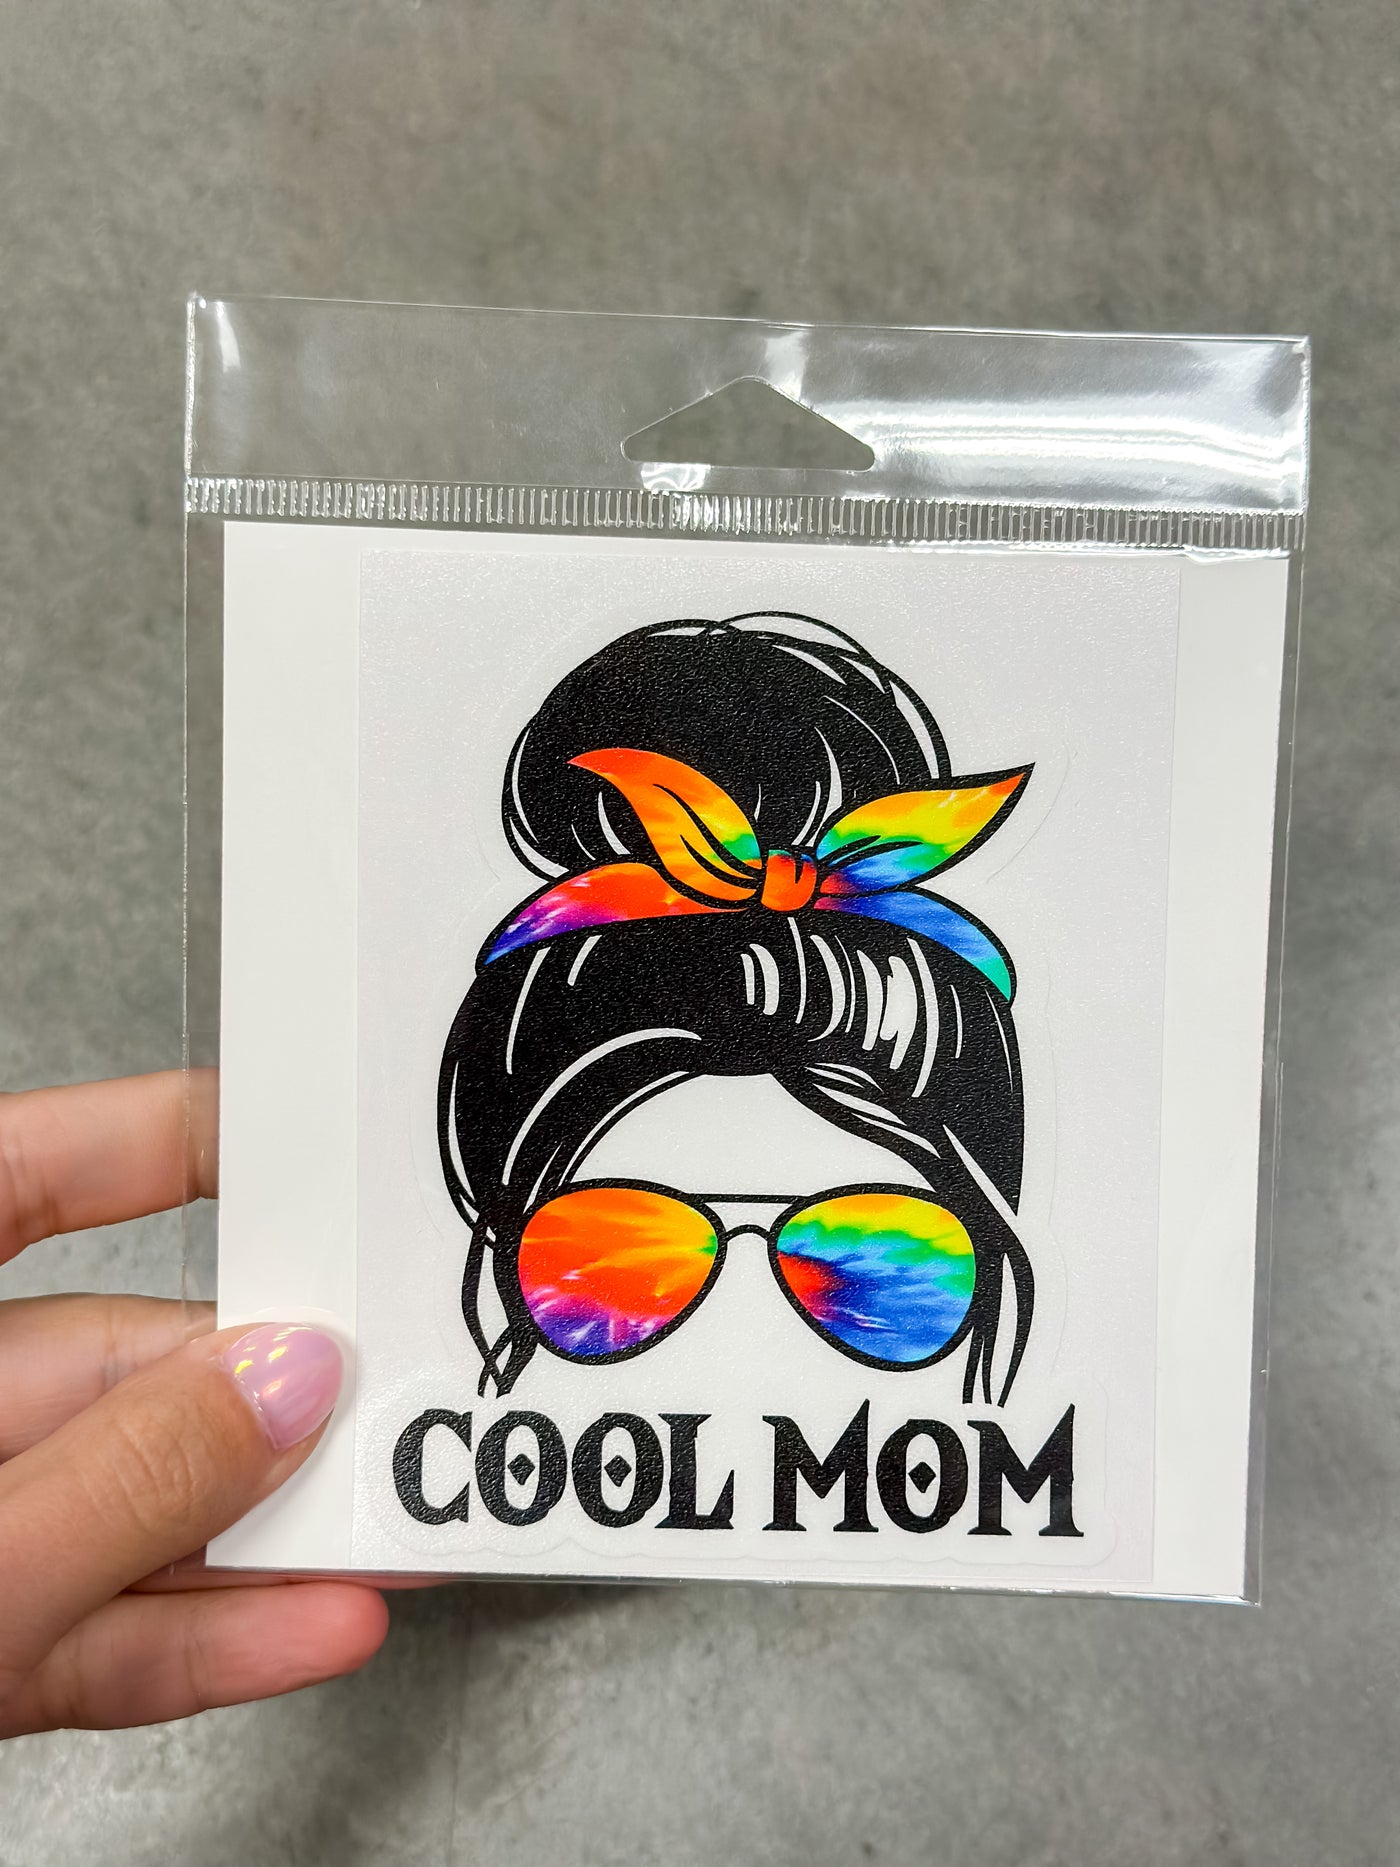 Cool Mom - Tye Dye Sticker